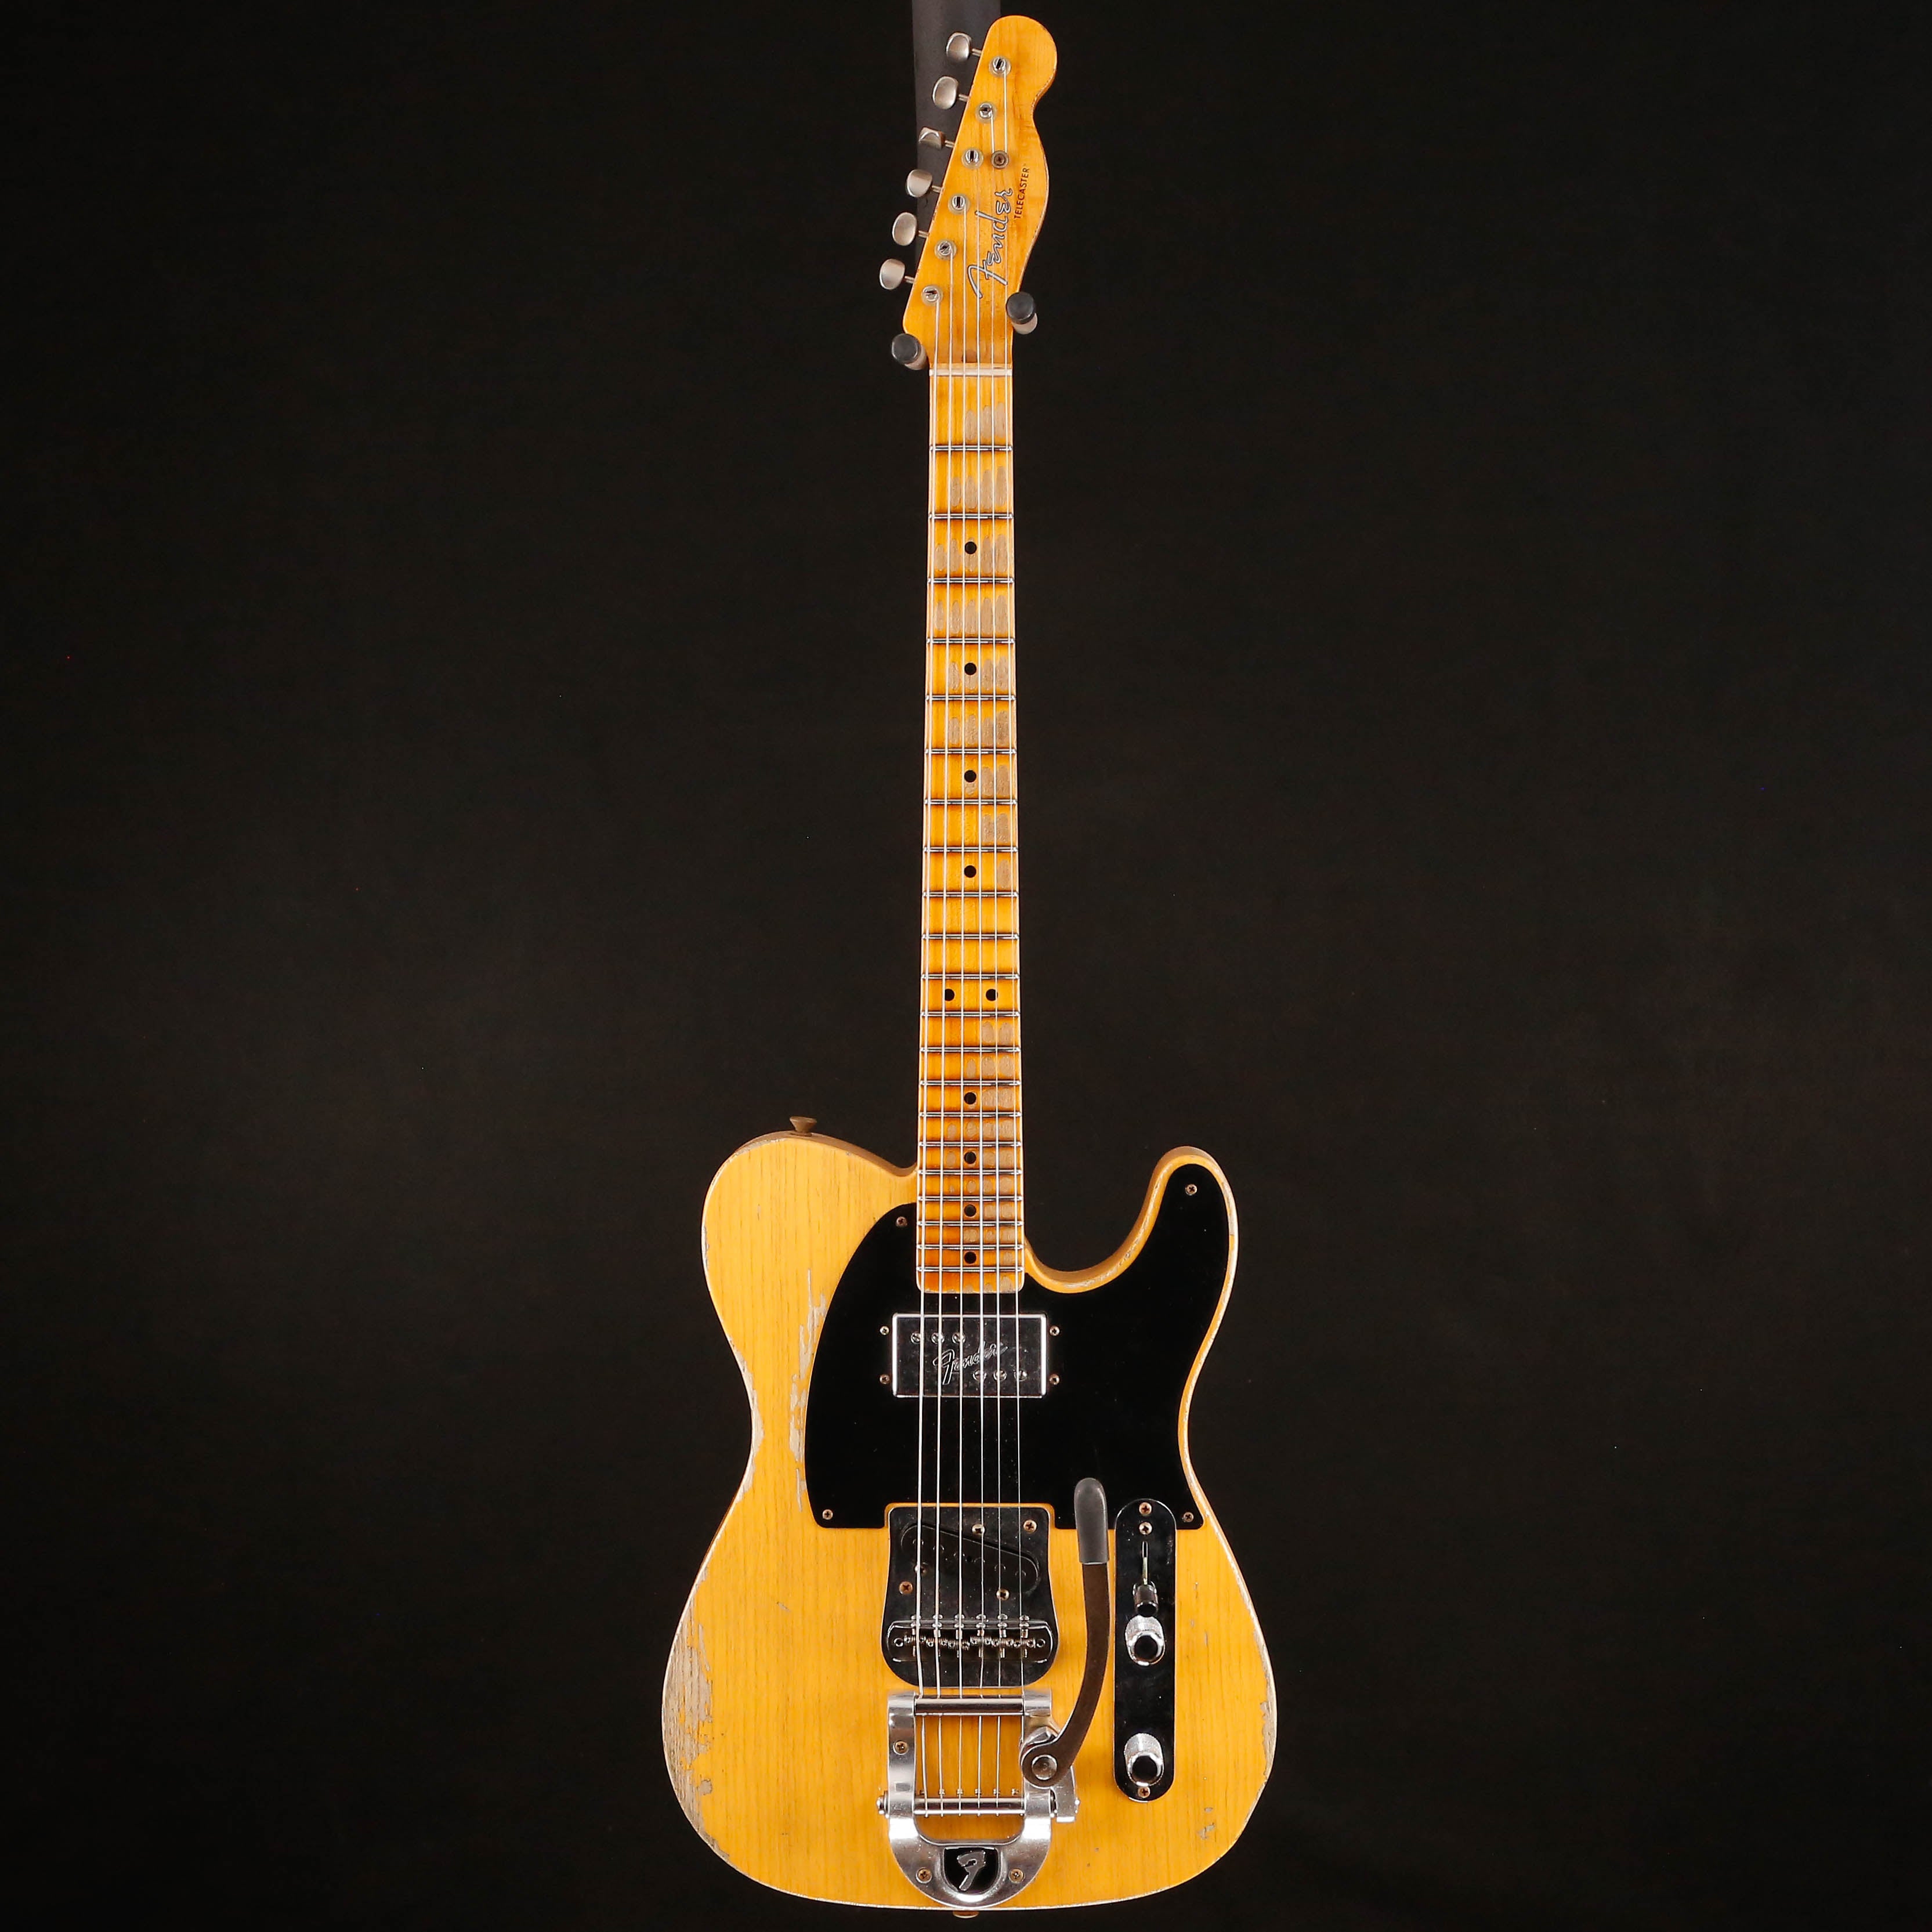 Fender Custom Shop Cunife Hvy Relic Blackguard Telecaster,Bs Blonde 6246 8lb 9.4o